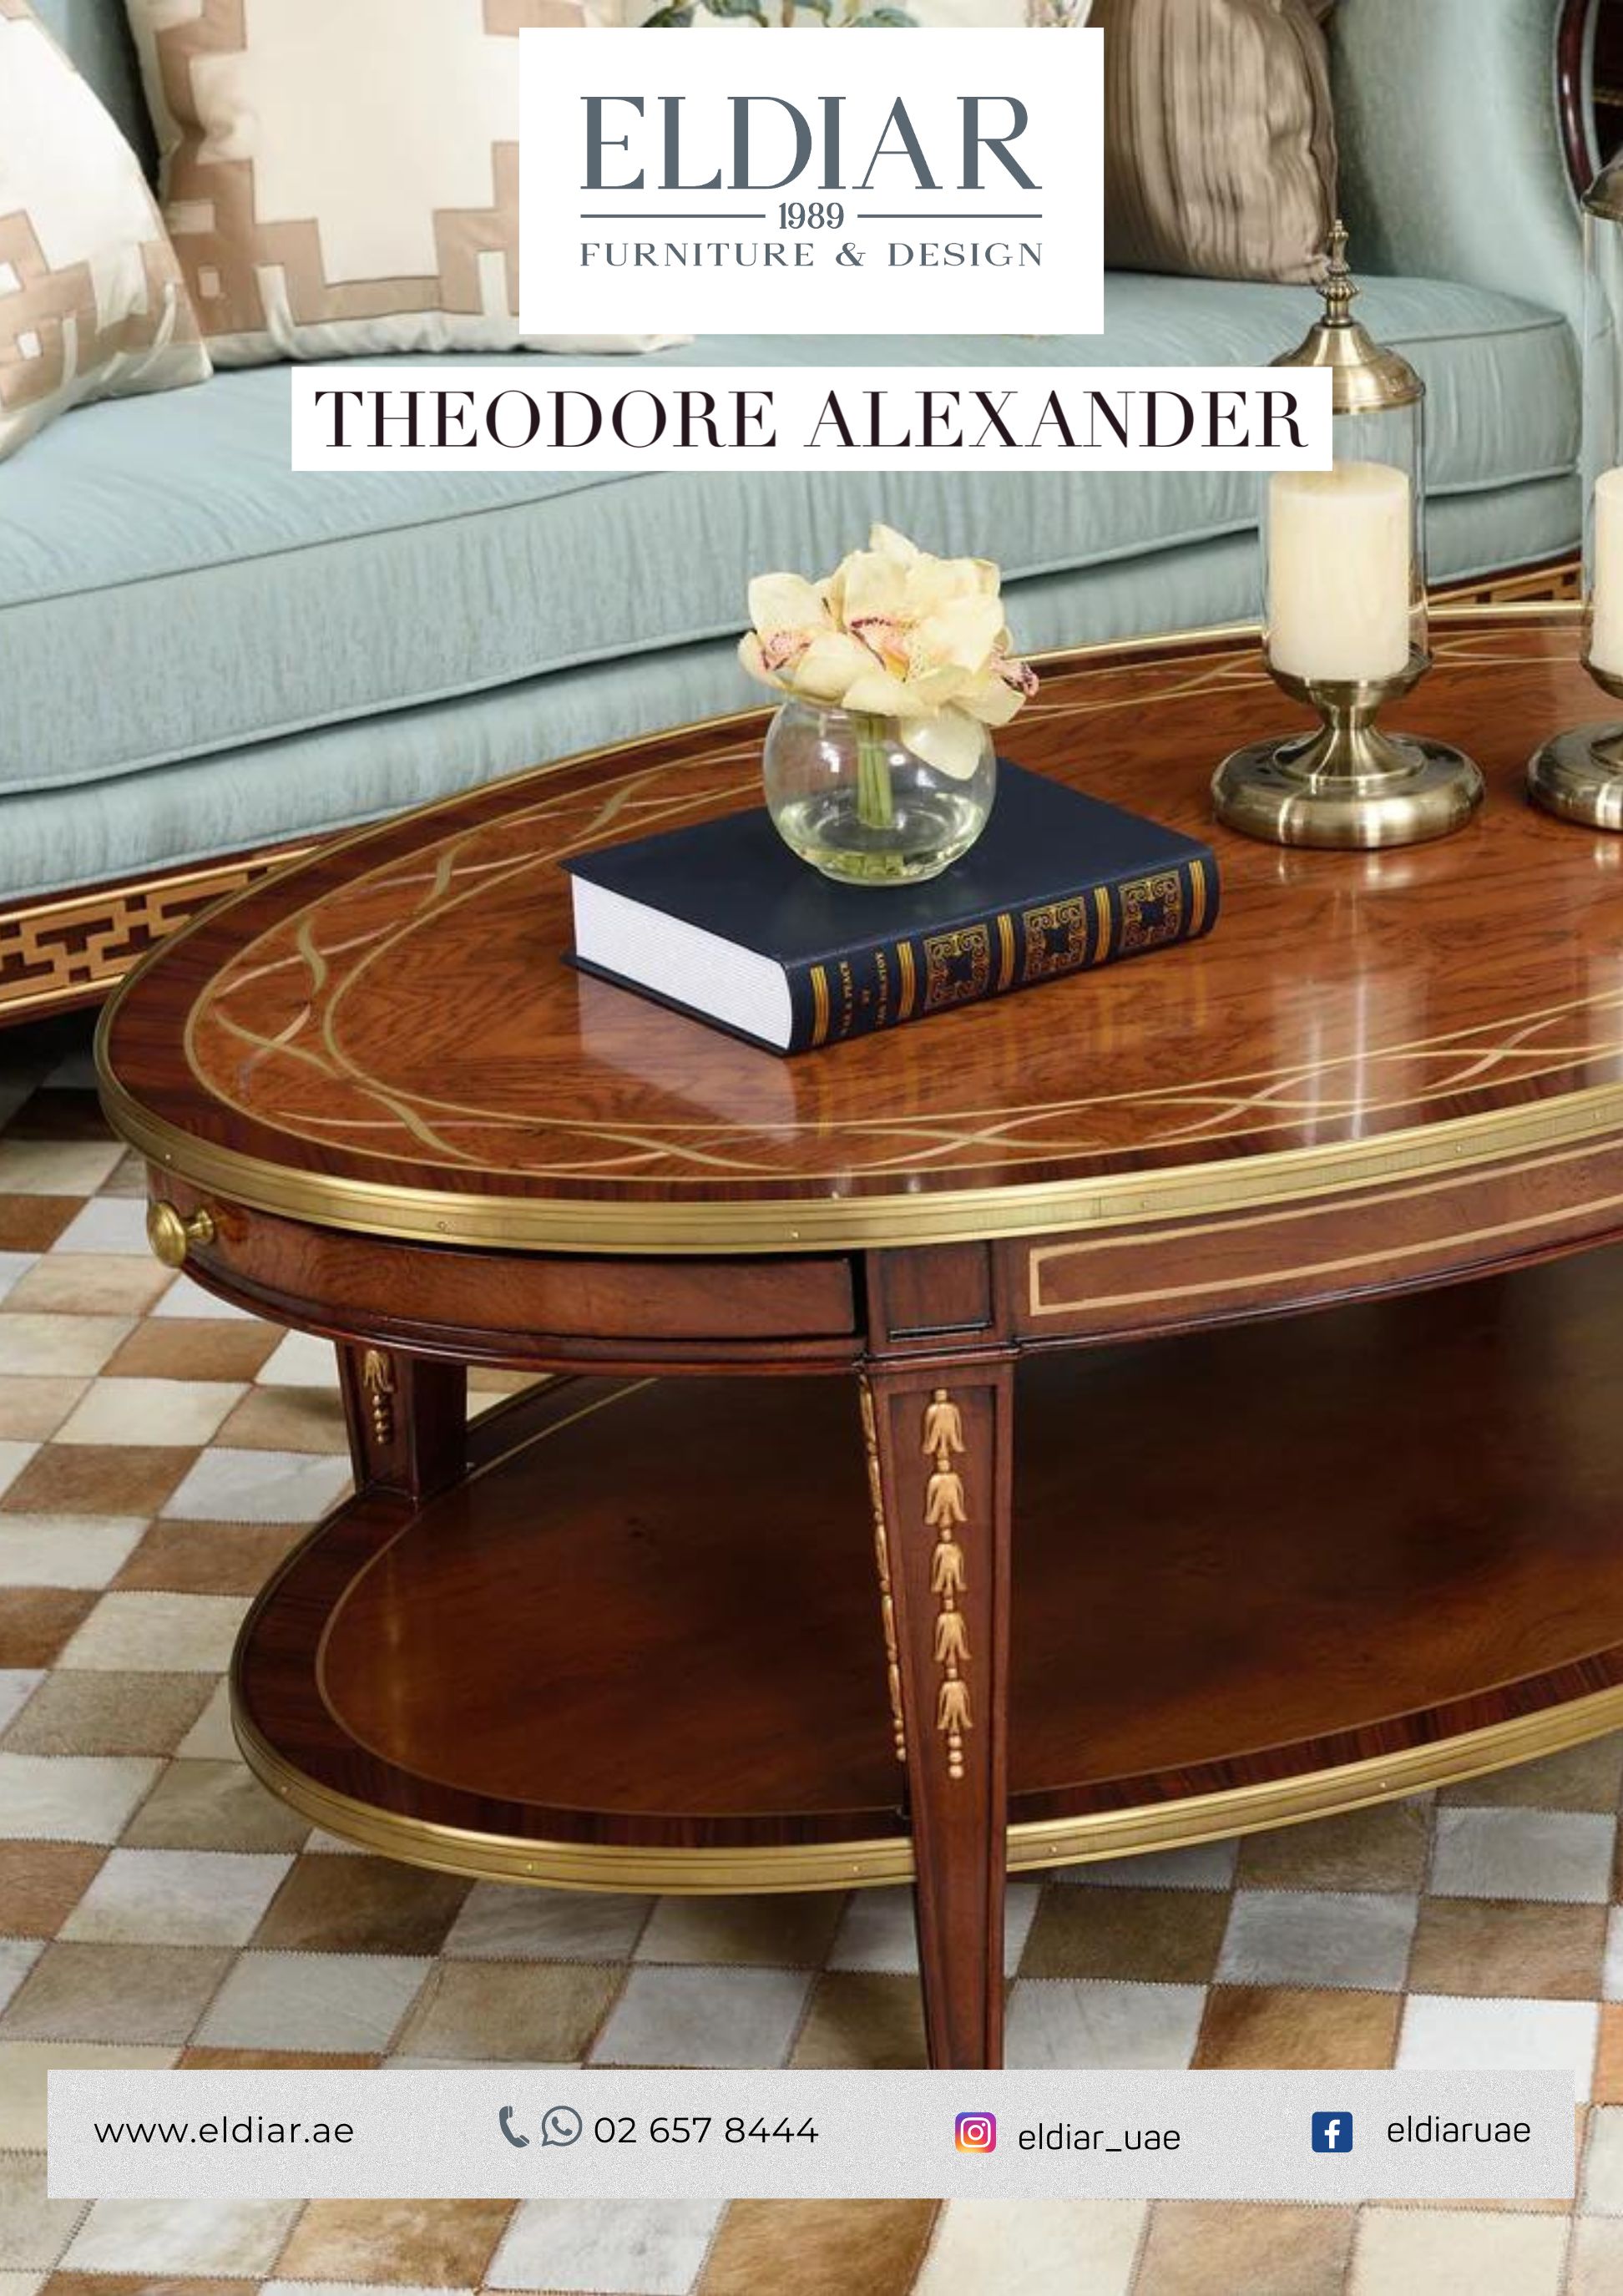 THEODORE ALEXANDER MAY 24